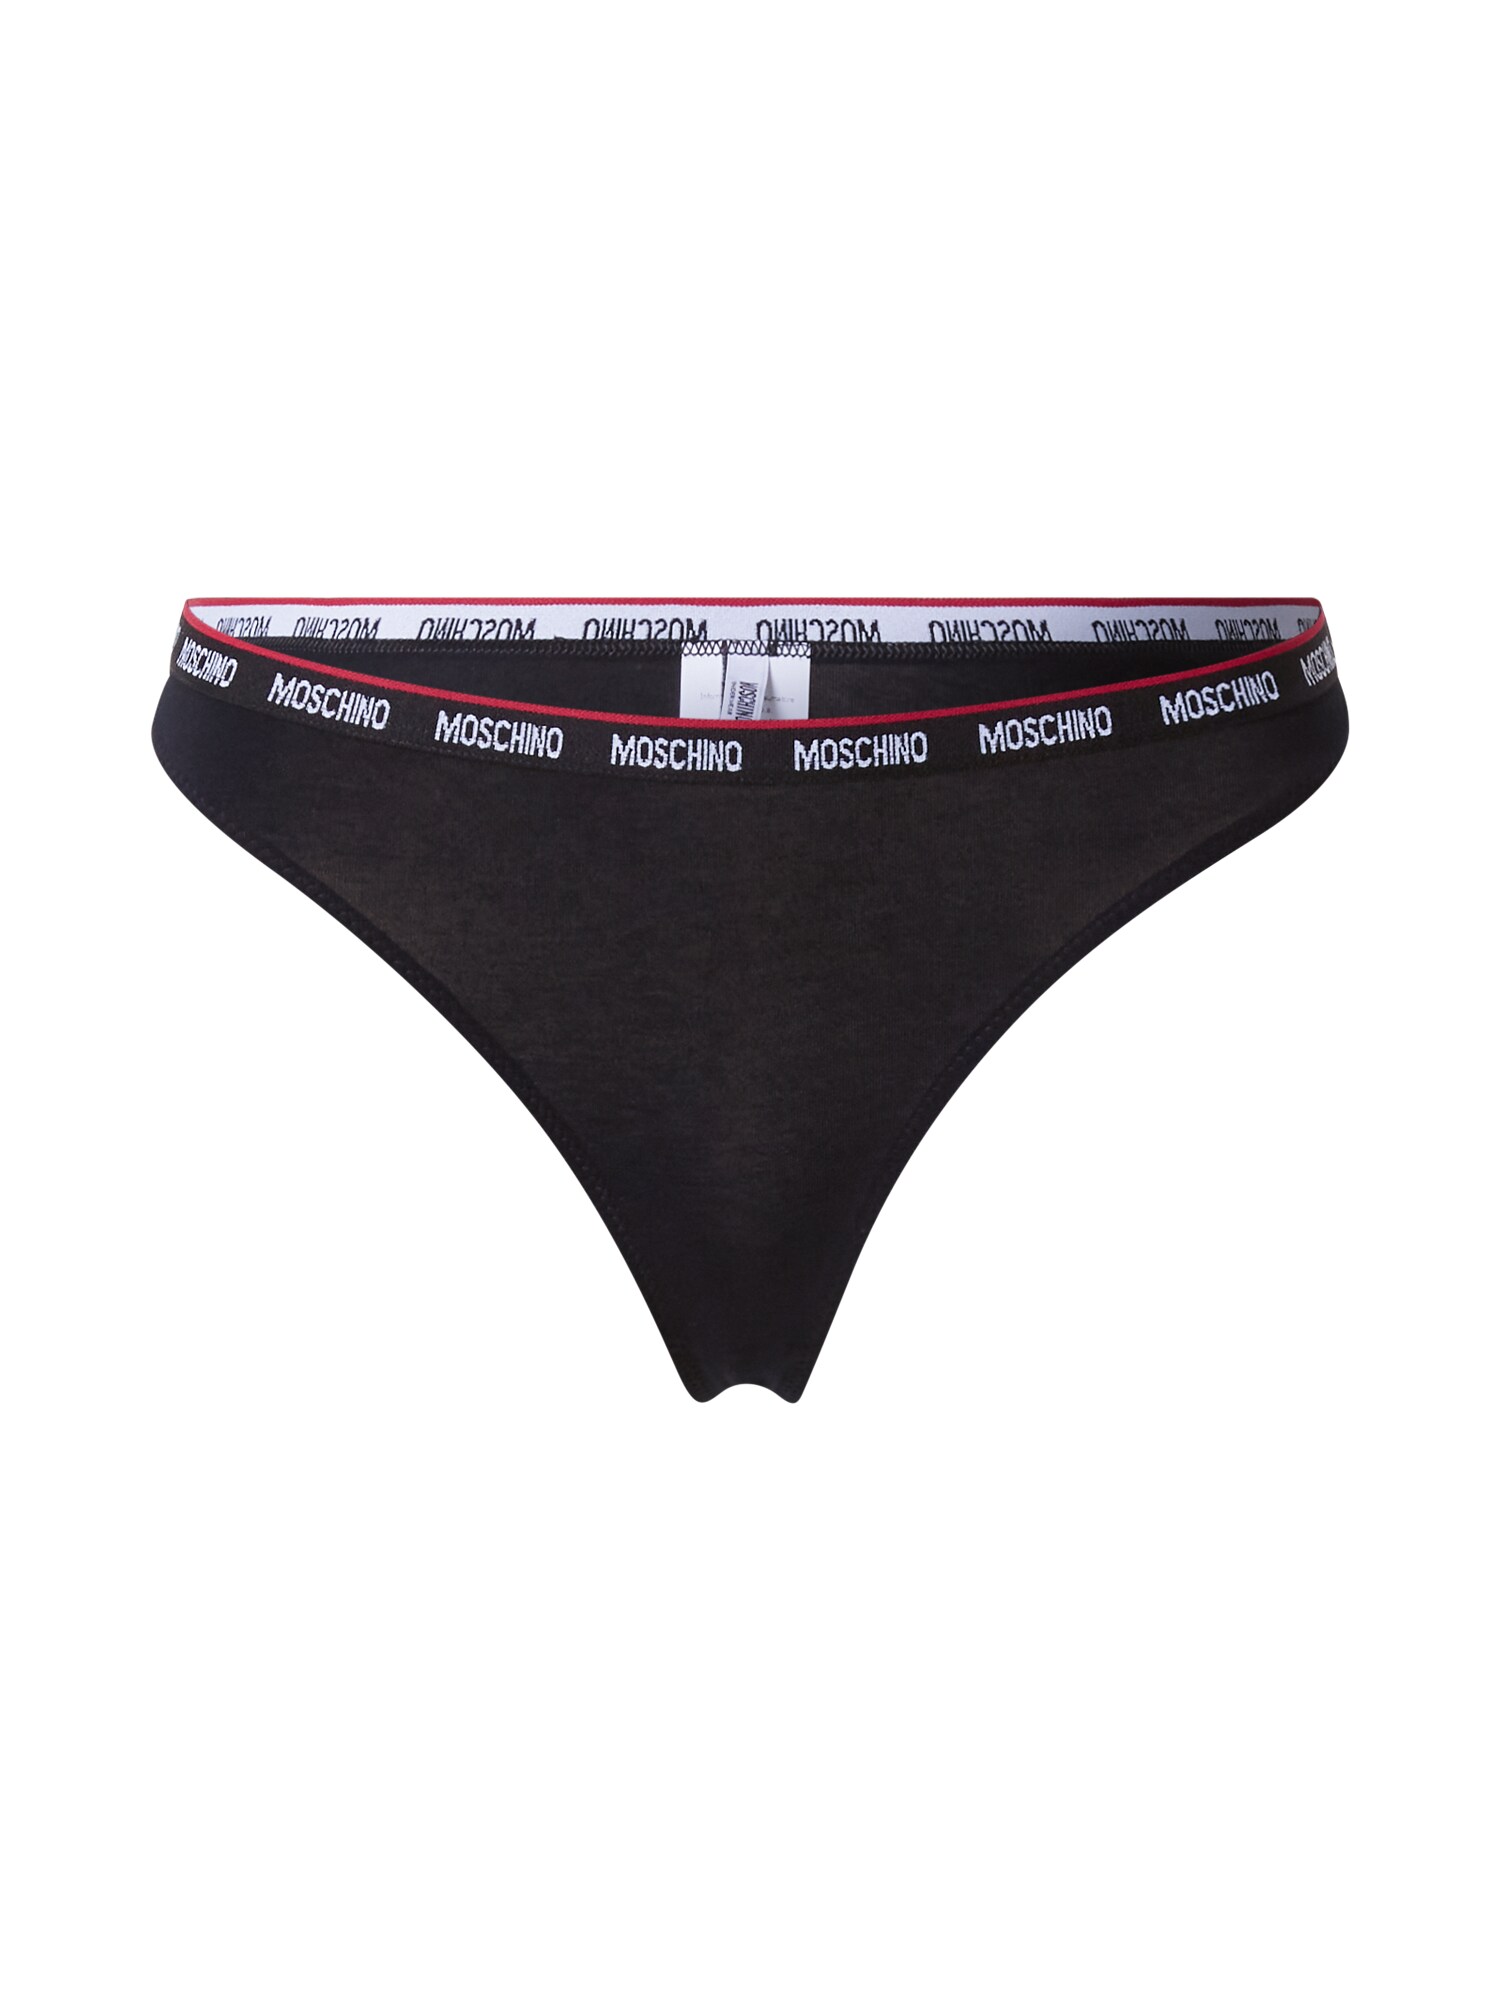 Moschino Underwear Siaurikės juoda / raudona / balta